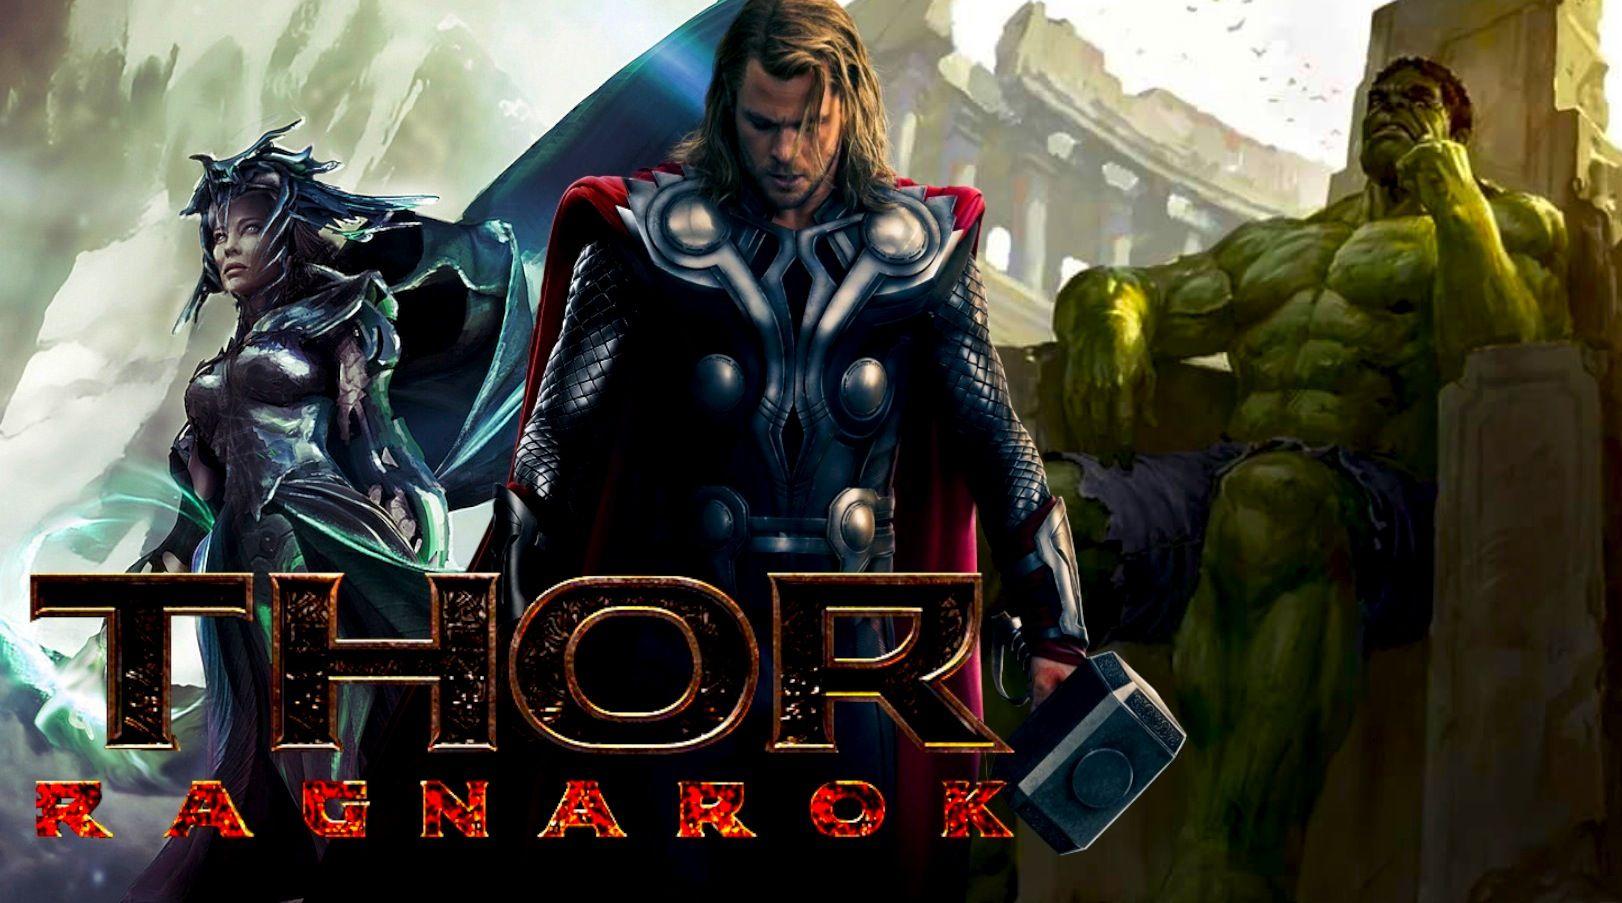 New Hulk vs Thor Image From Ragnarok